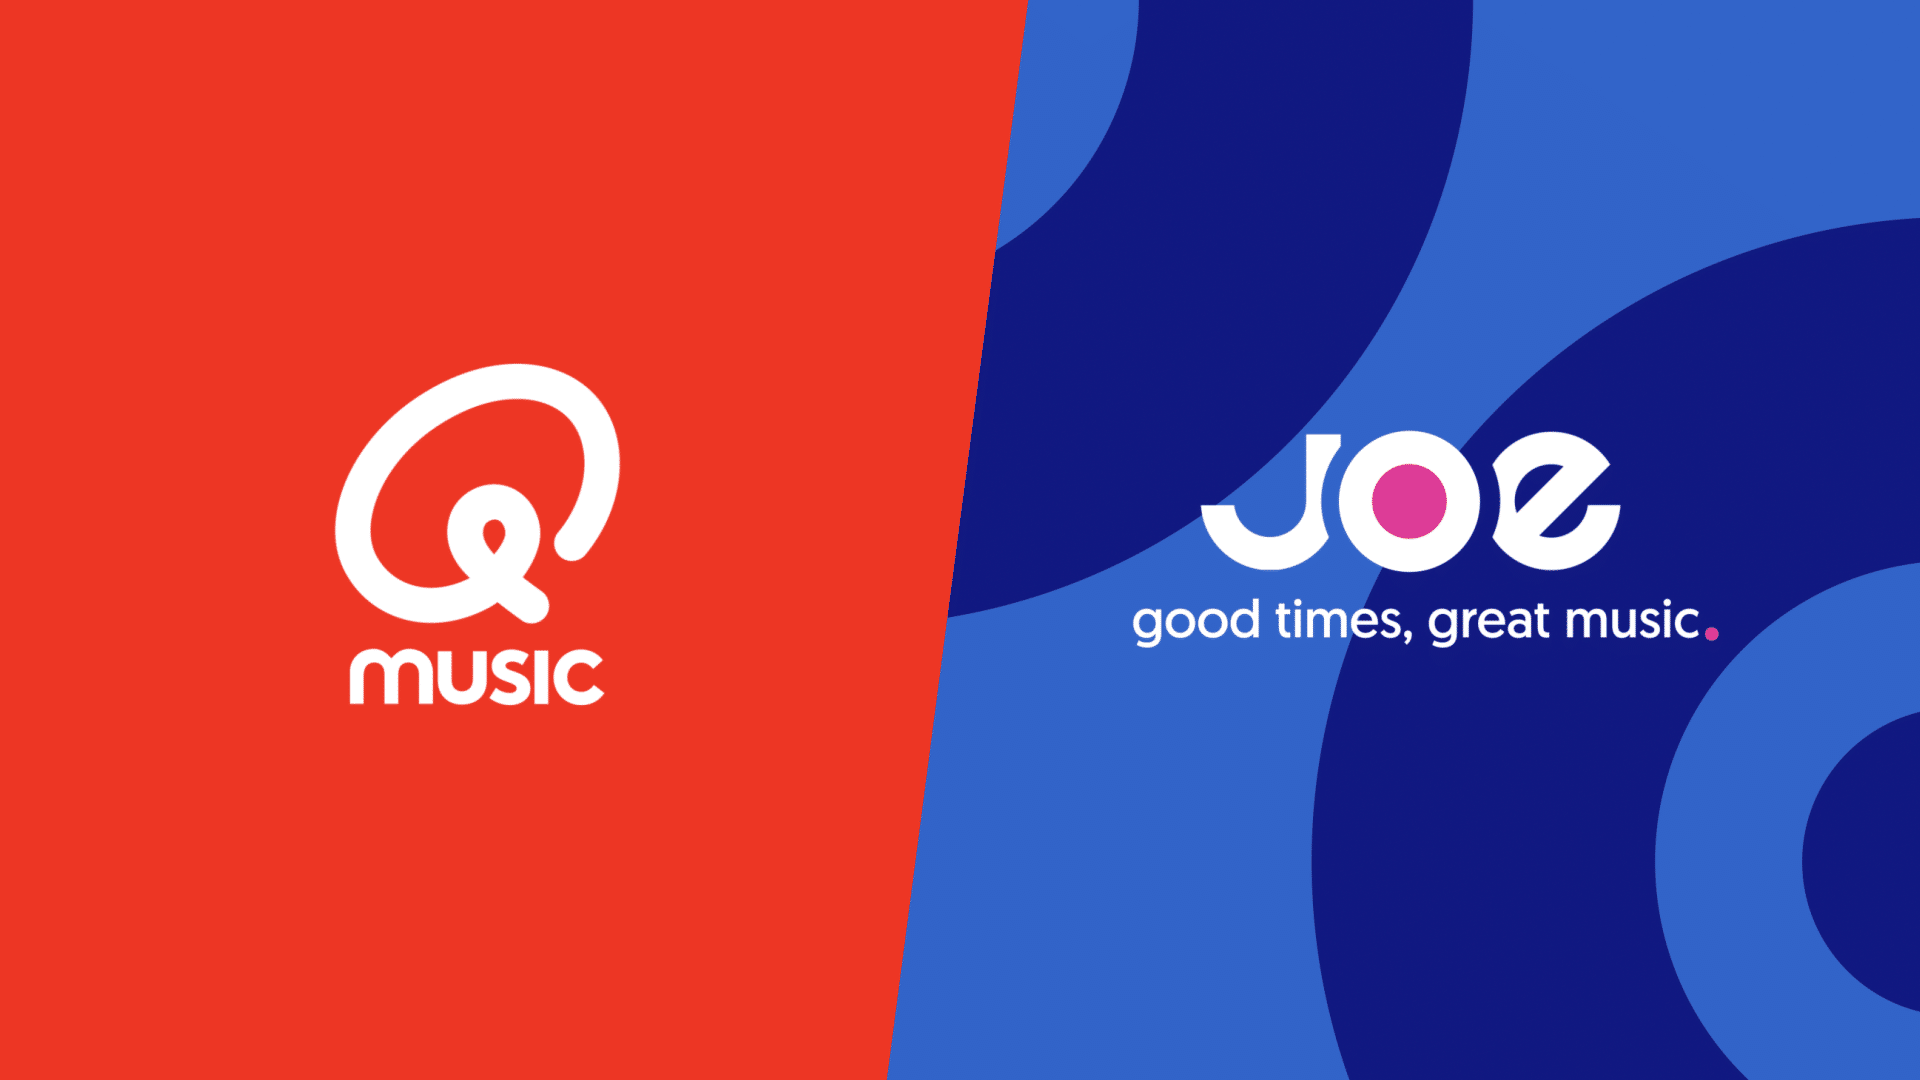 Q Music & Joe